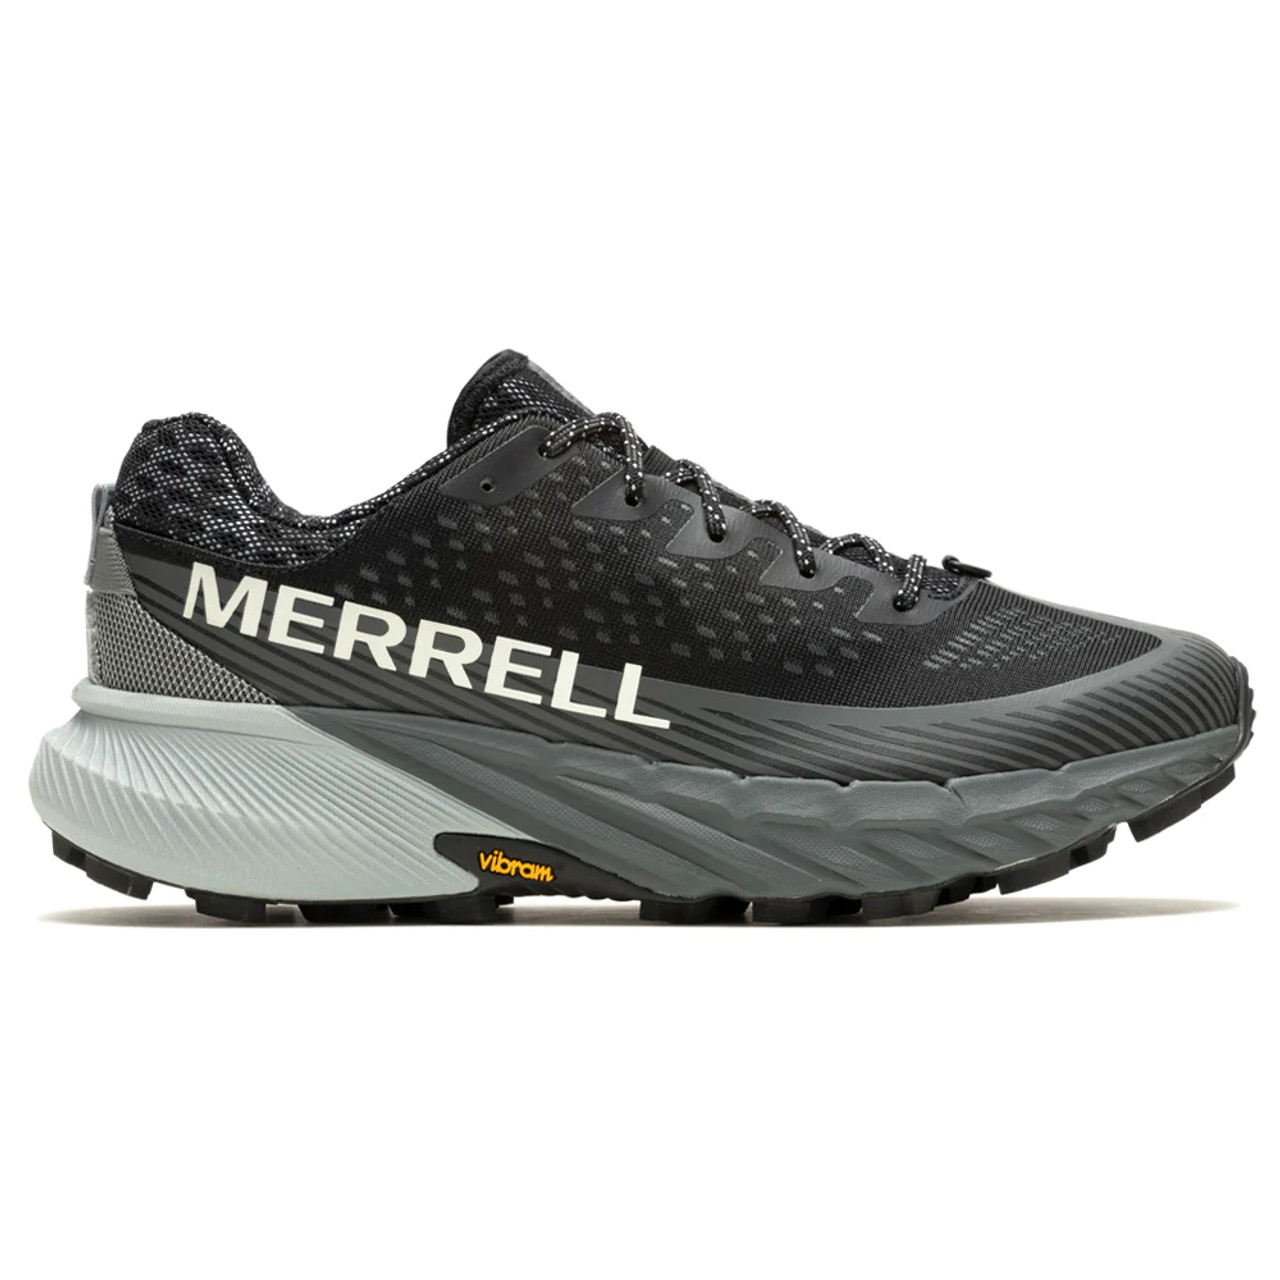  Merrell mens Vapor Glove 5 Sneaker, Rock, 7 US